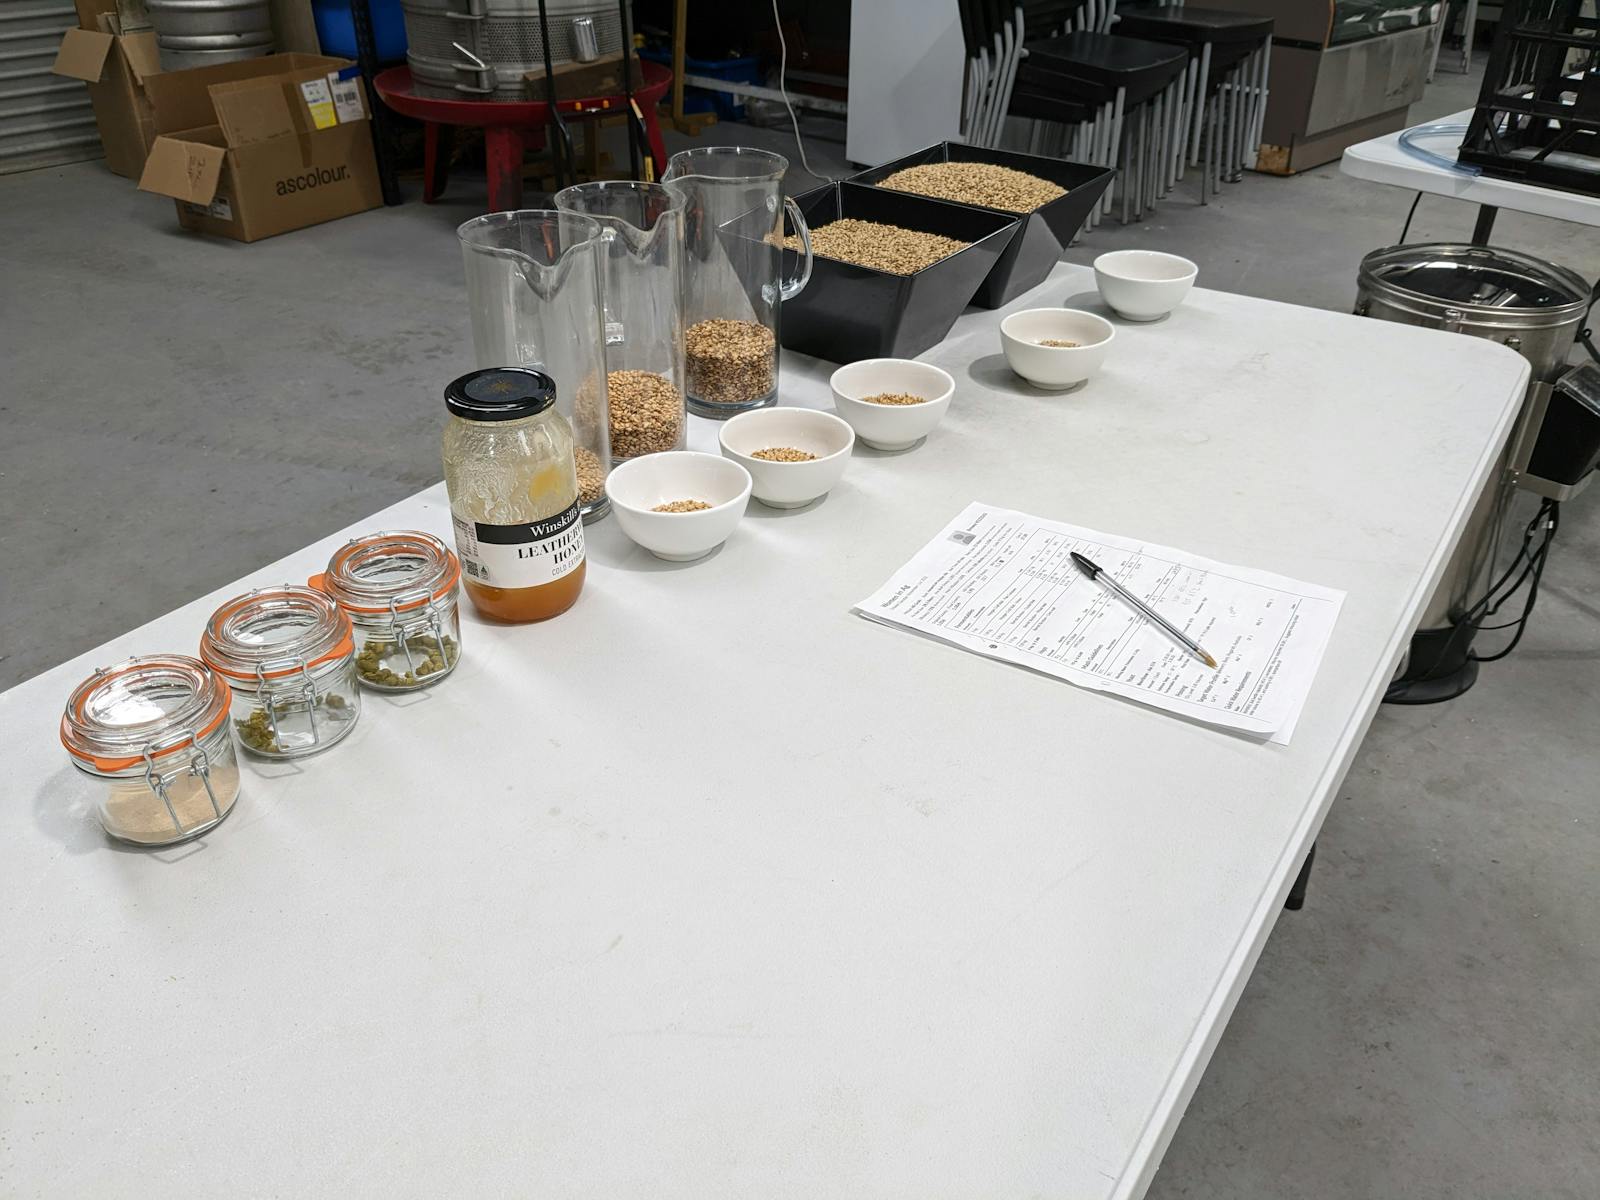 Small samples of beer brewing ingredients